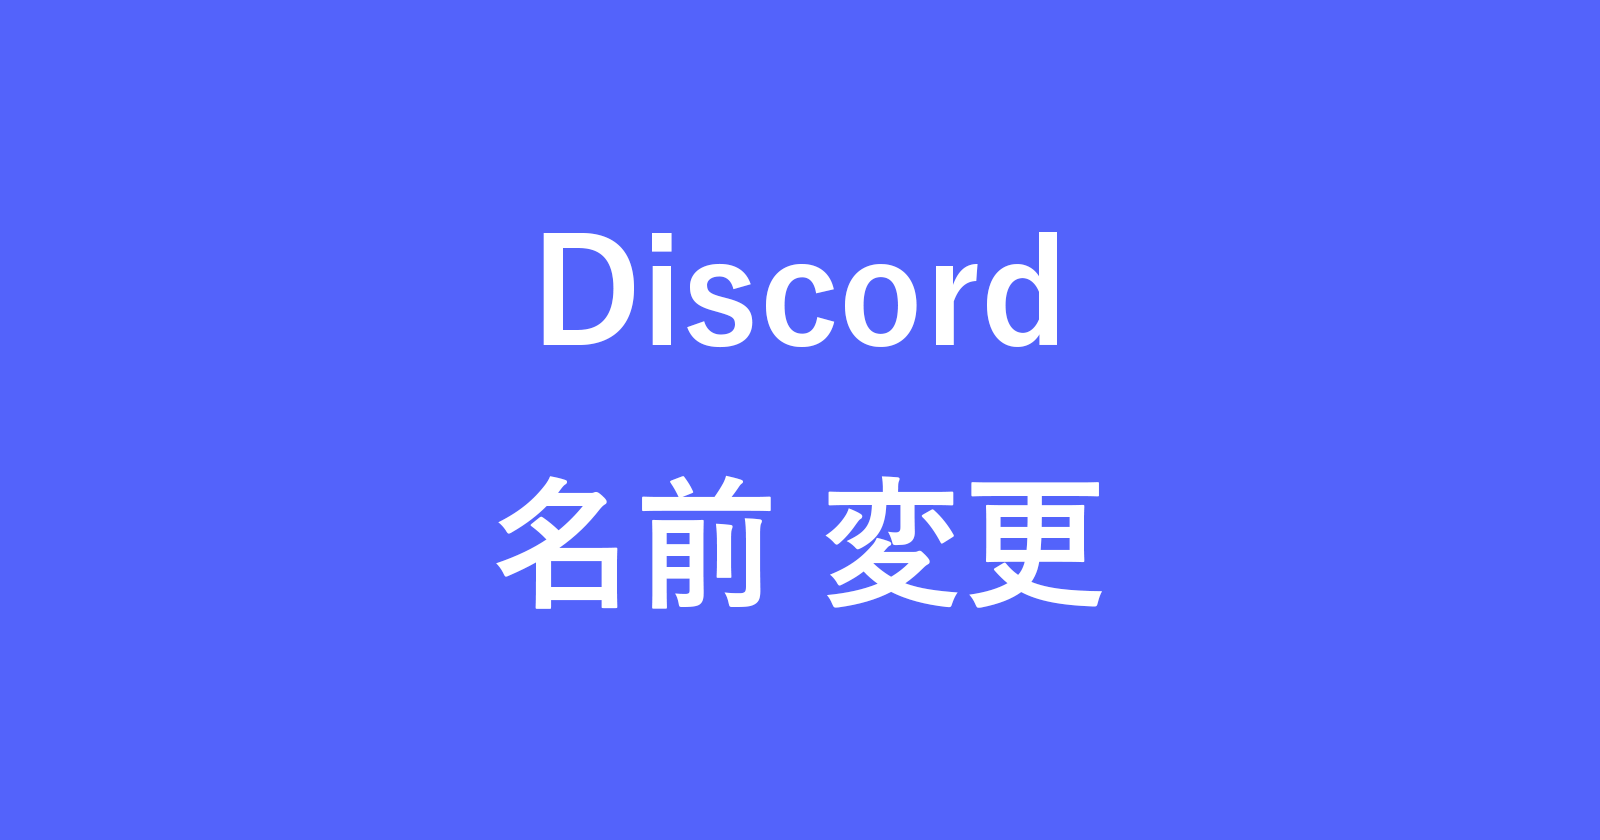 discord change name